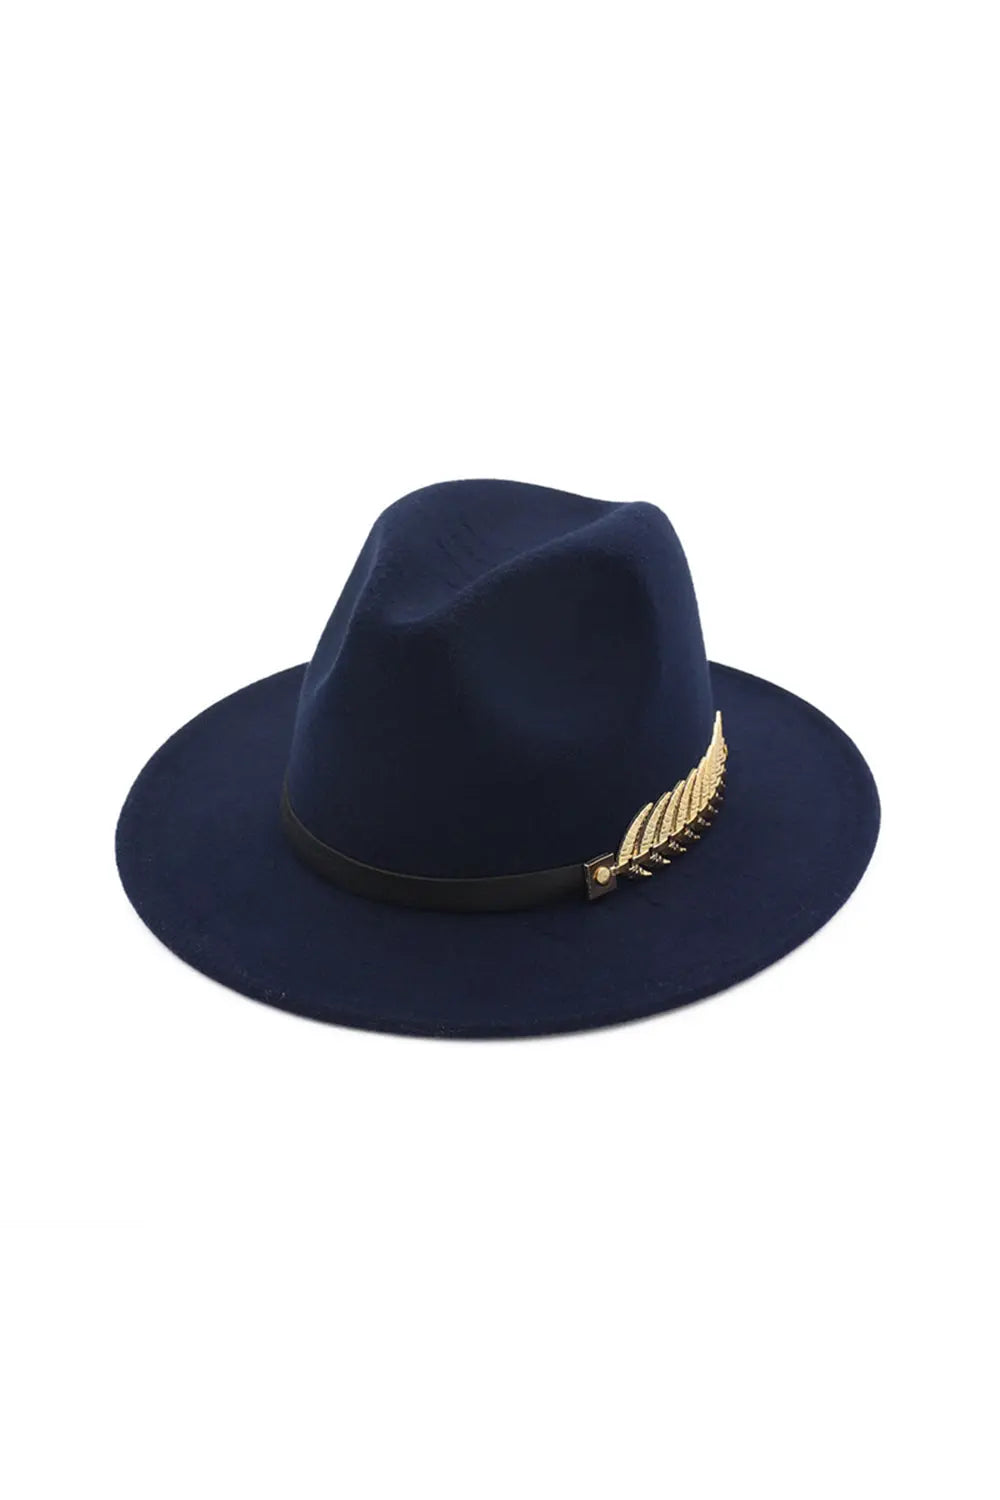 Jazz Hat - Navy Blue - Strange Clothes